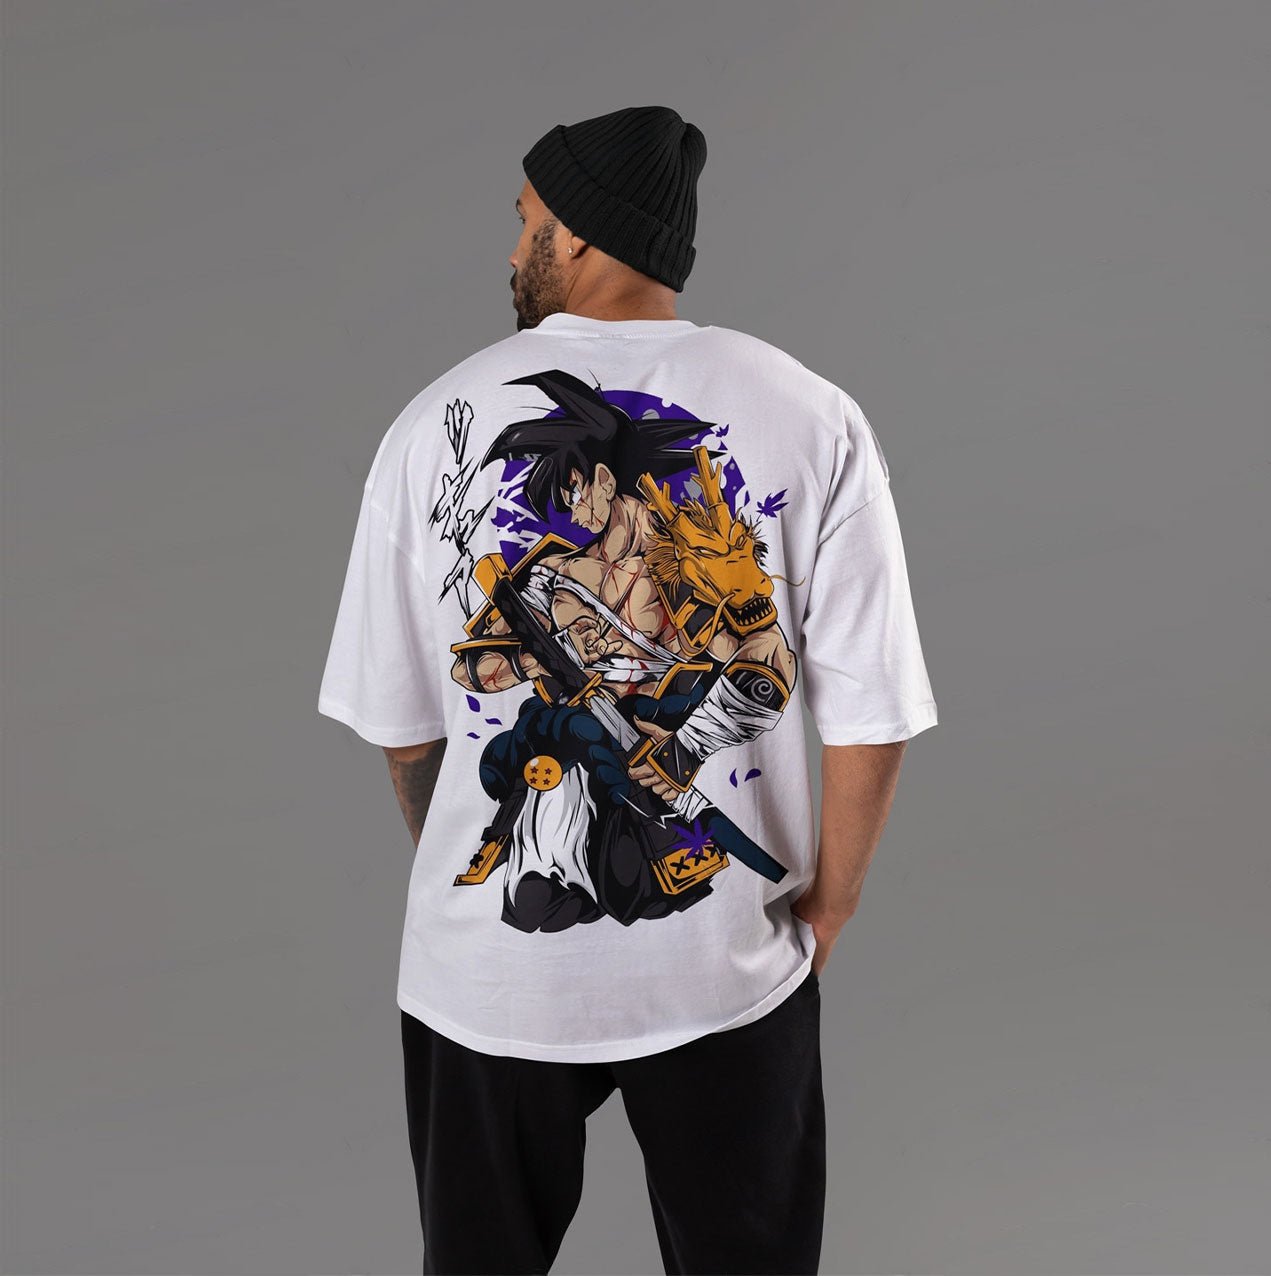 Goku Samurai oversized Anime Tshirt Wthie Edition - Gizmoz.in